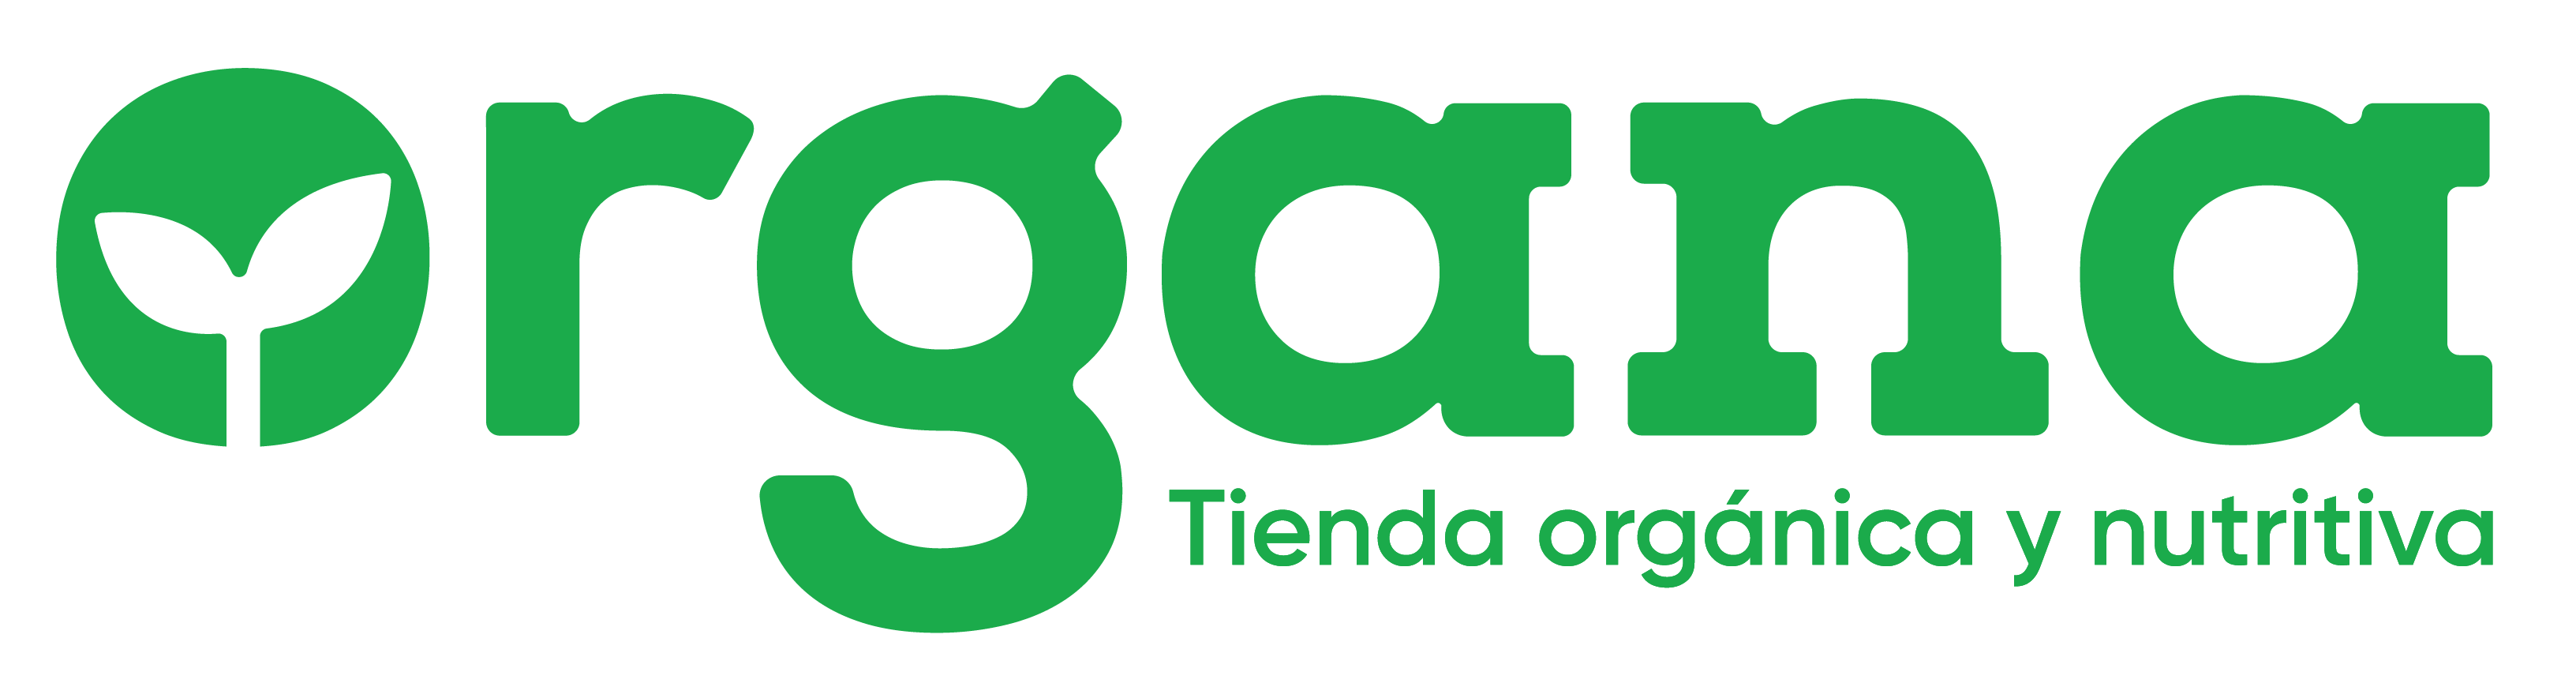 Logo Organa